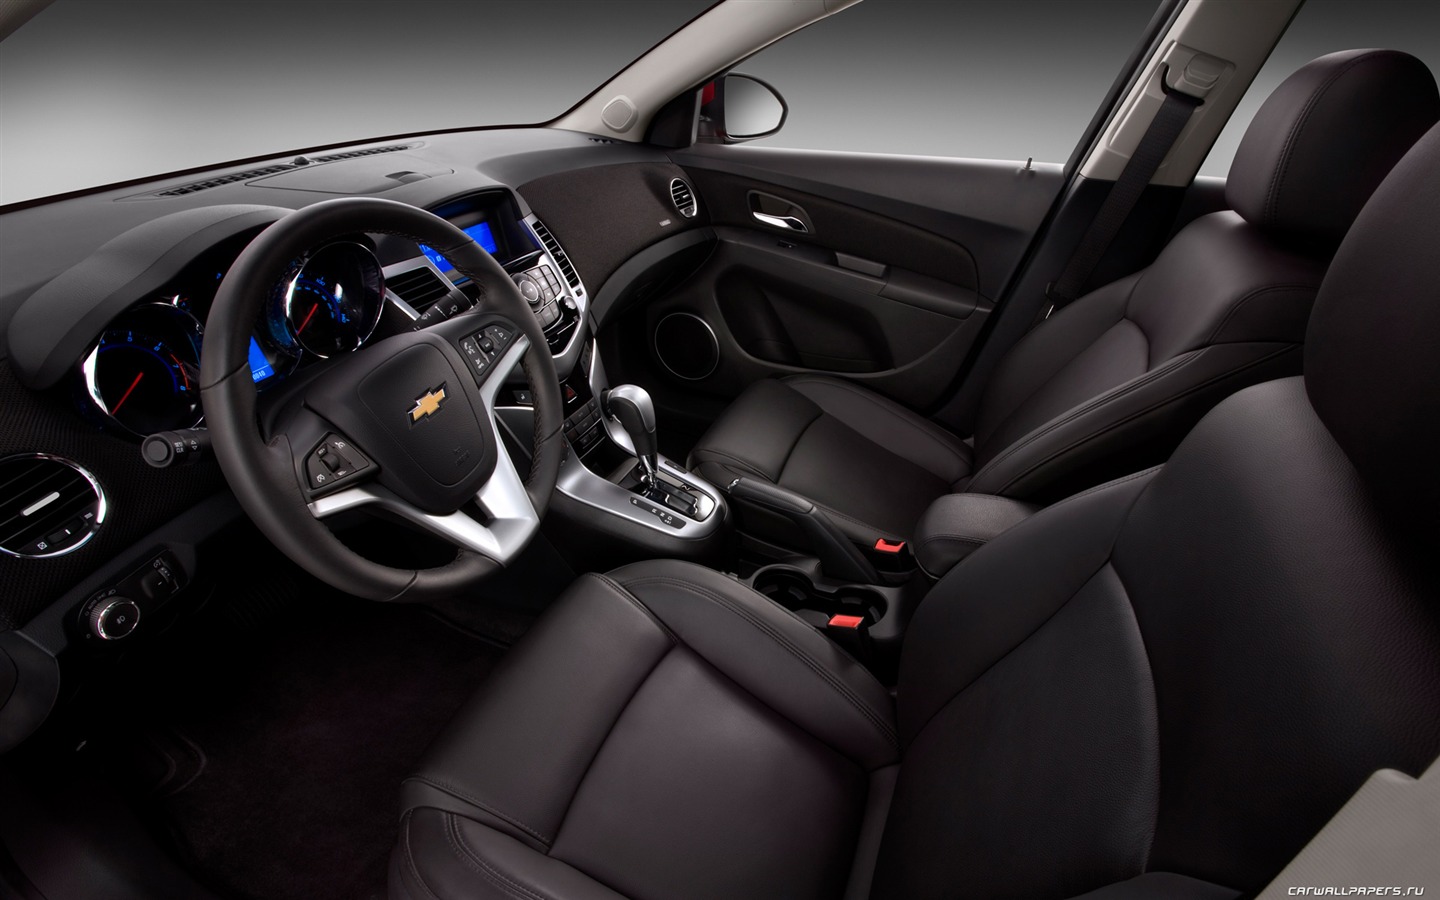 Chevrolet Cruze RS - 2011 雪佛兰13 - 1440x900